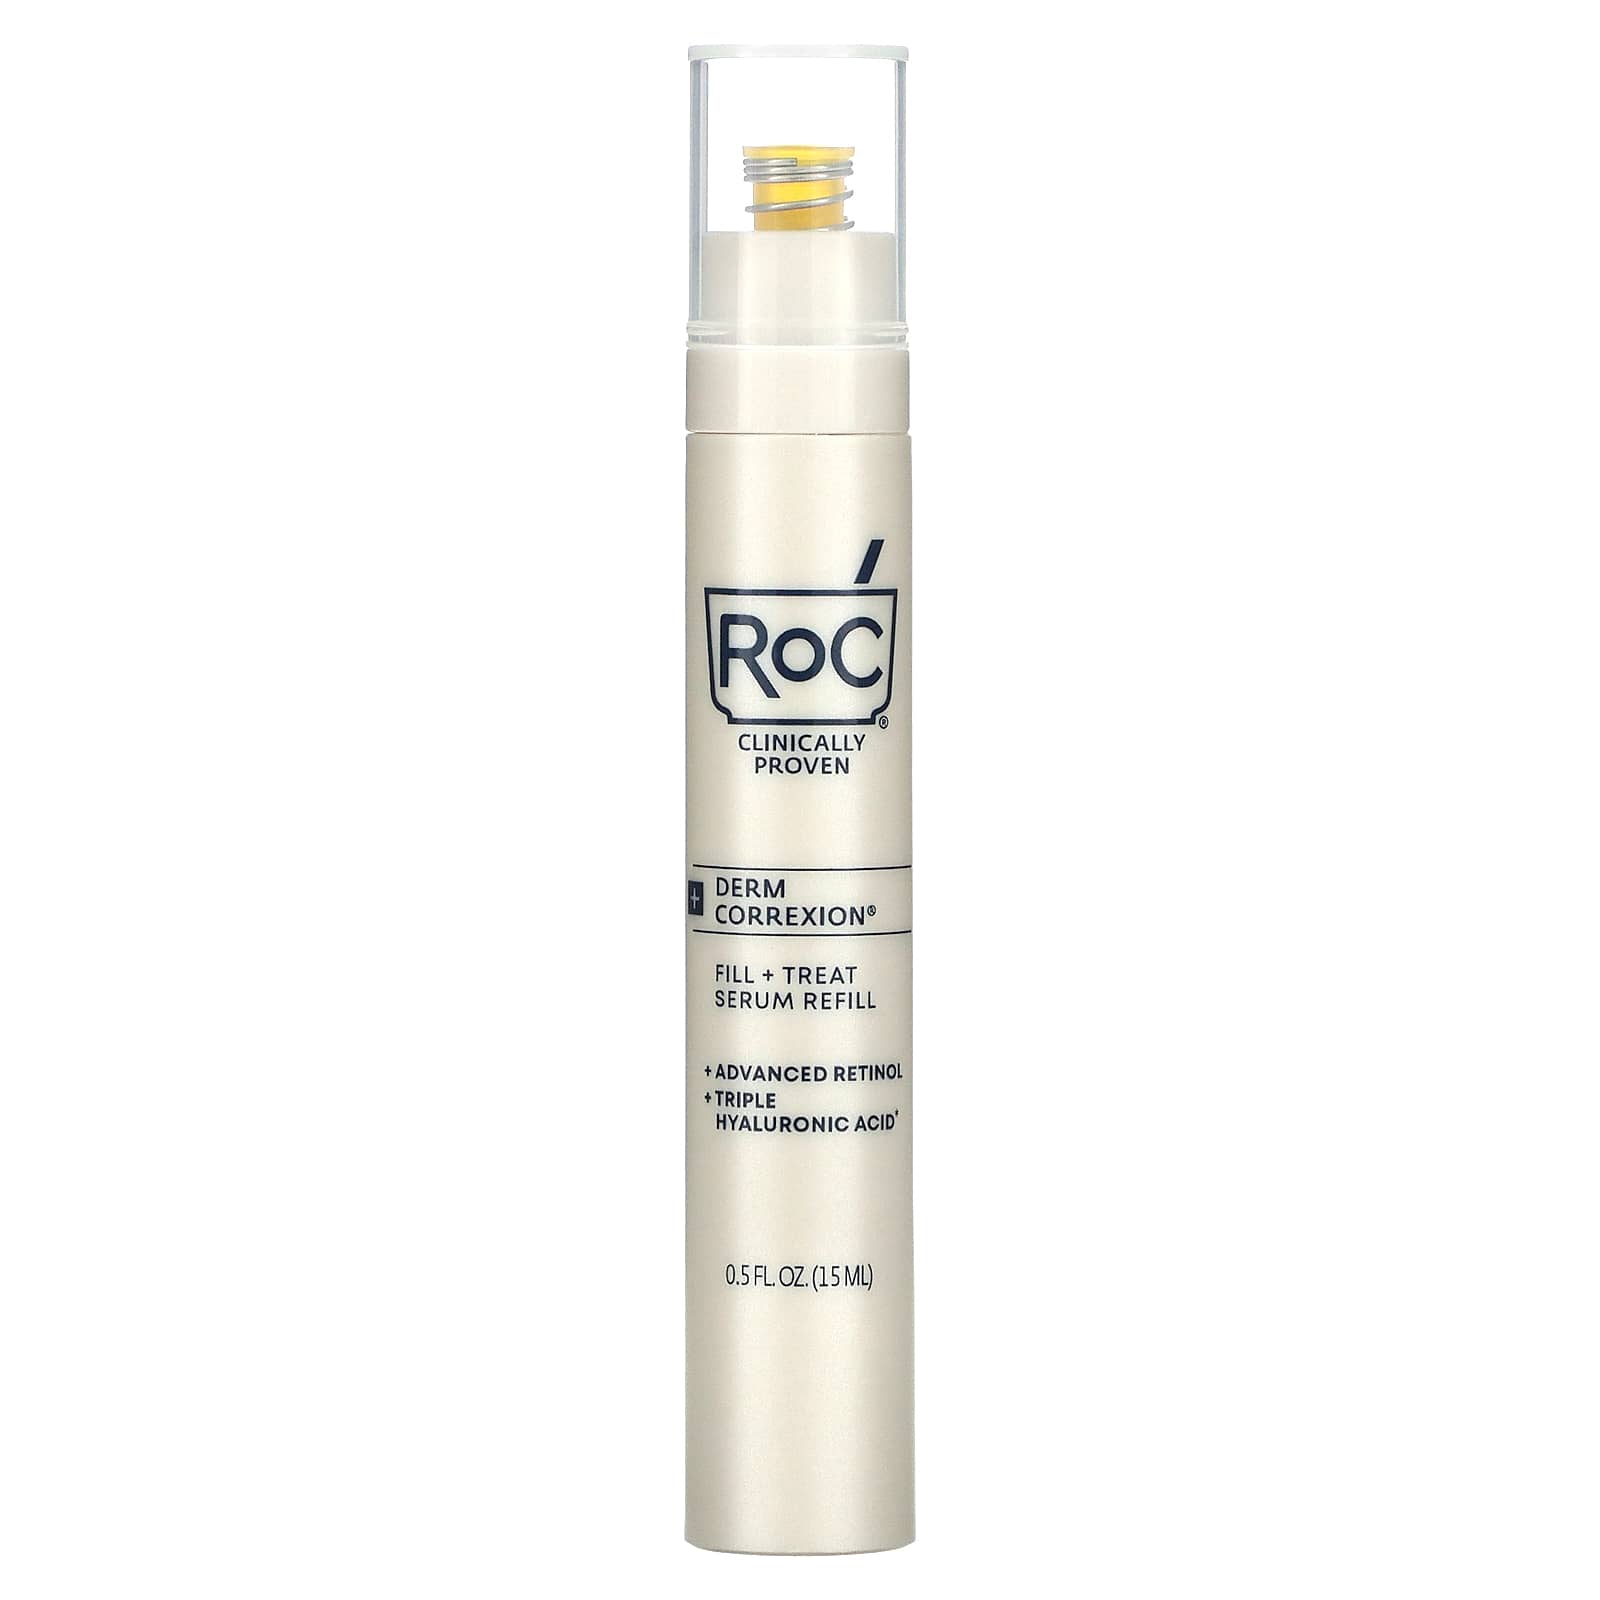 Сыворотка RoC Derm Correxion Fill + Treat Serum, 15 мл roc derm correxion contour cream advanced retinol